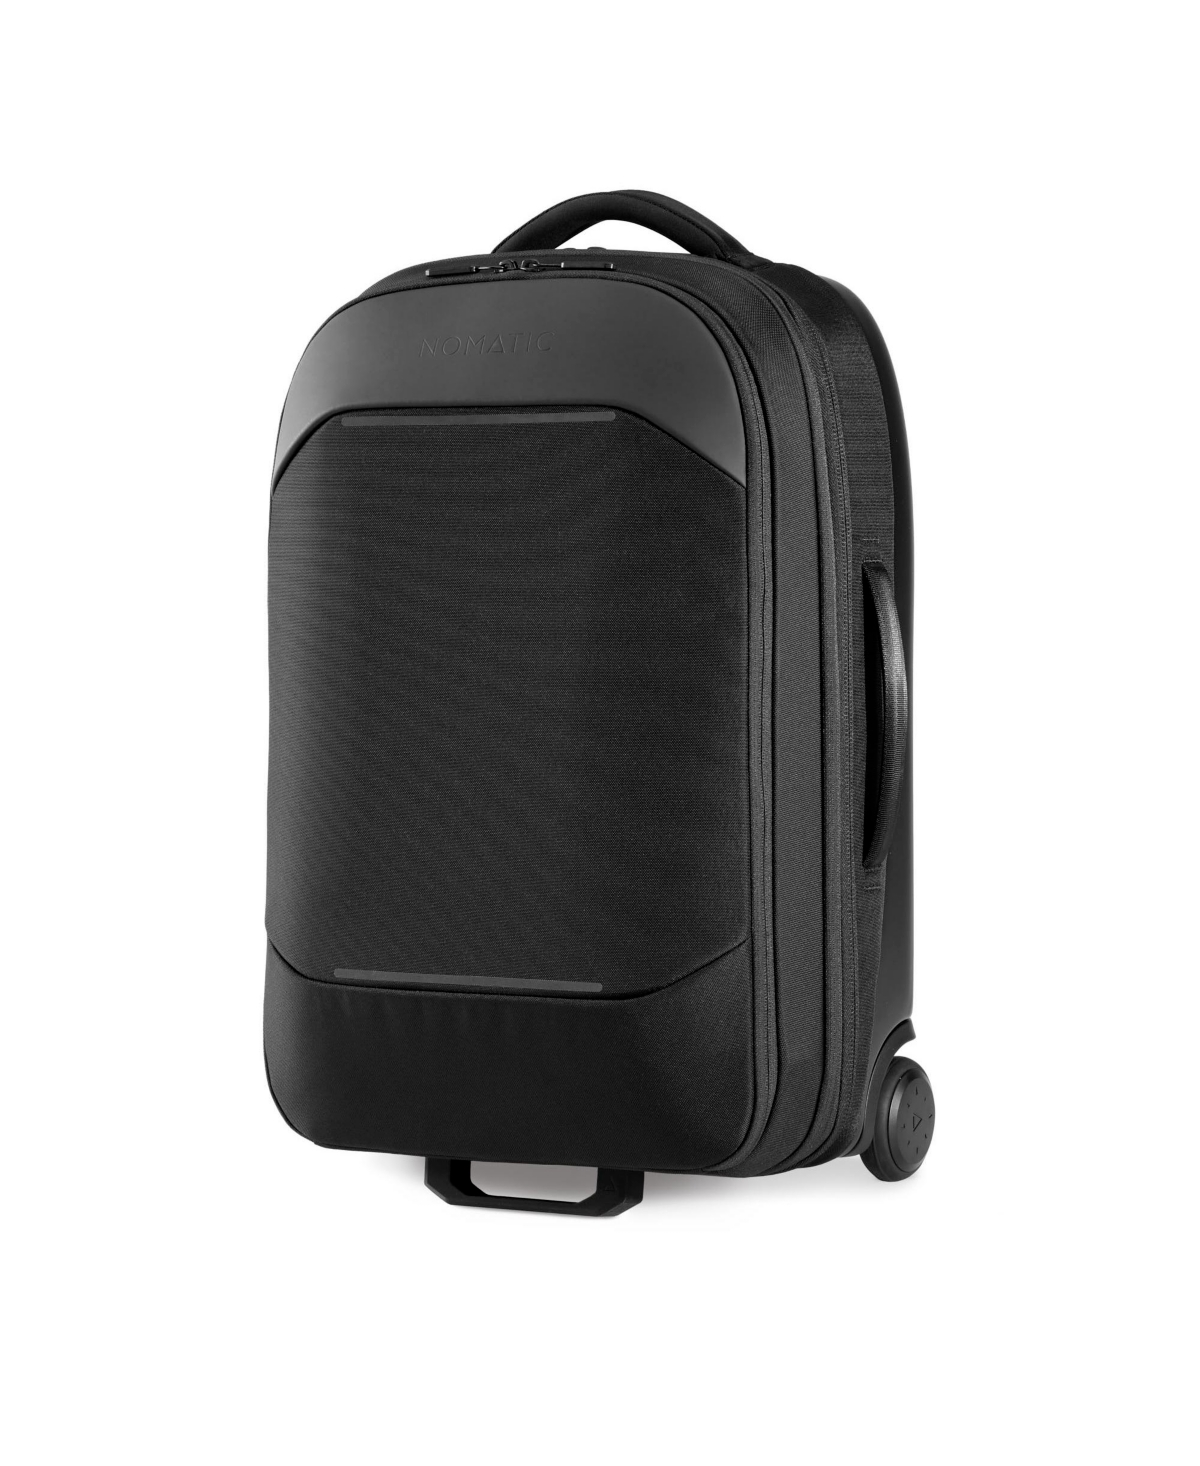 37L Carry-On - Expandable Hybrid 2 Wheel Luggage - Black